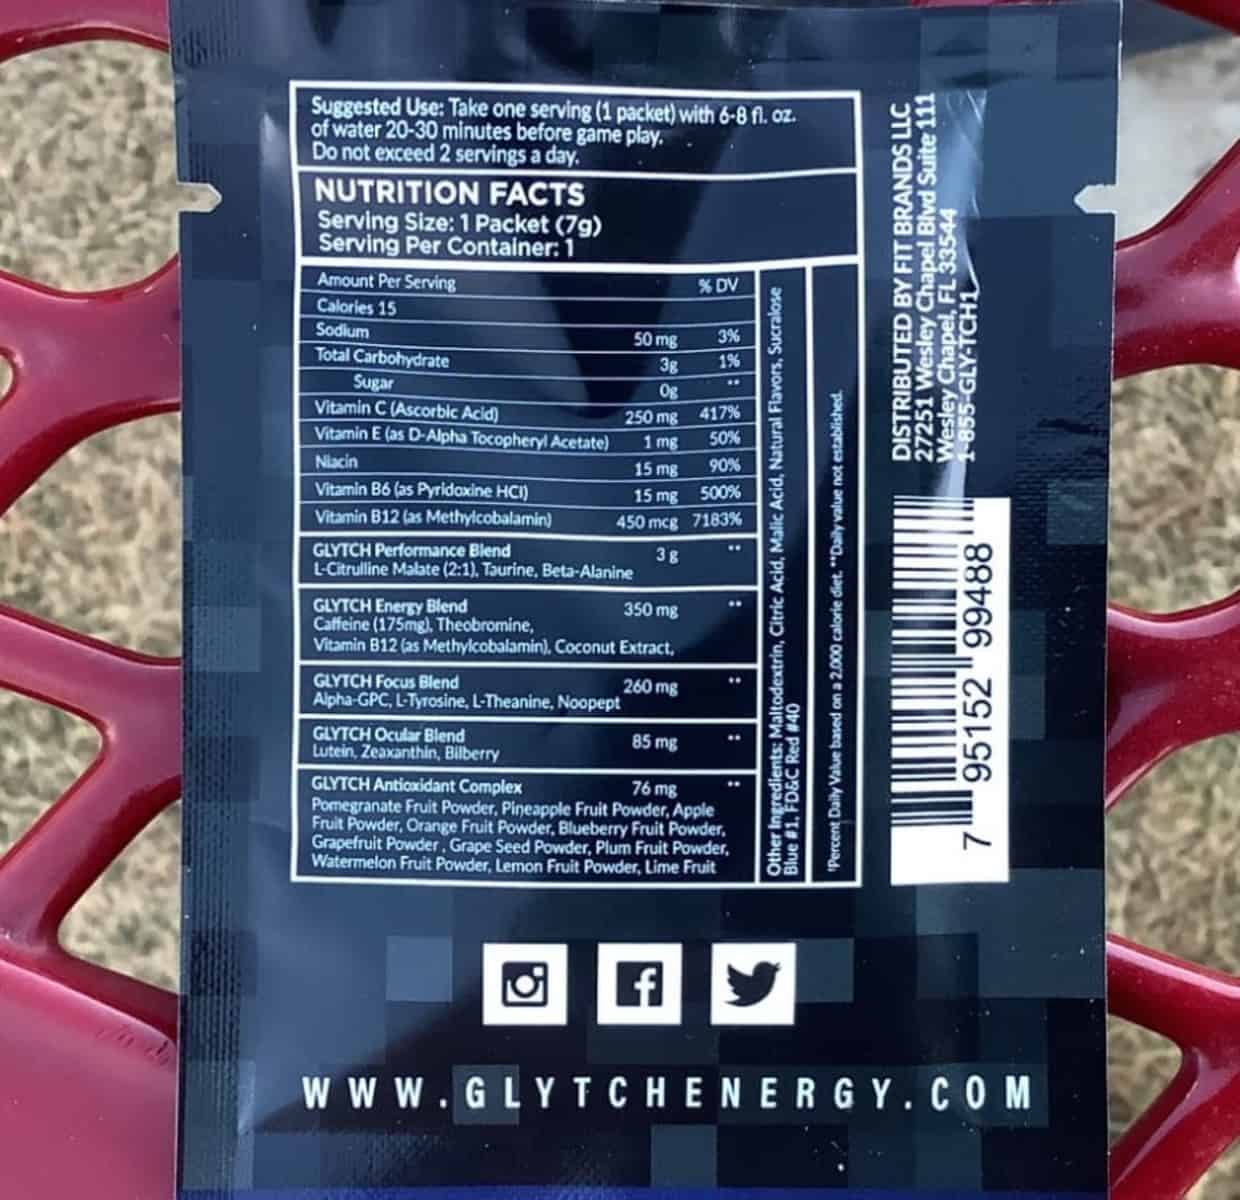 Nutrient label of Glytch Energy